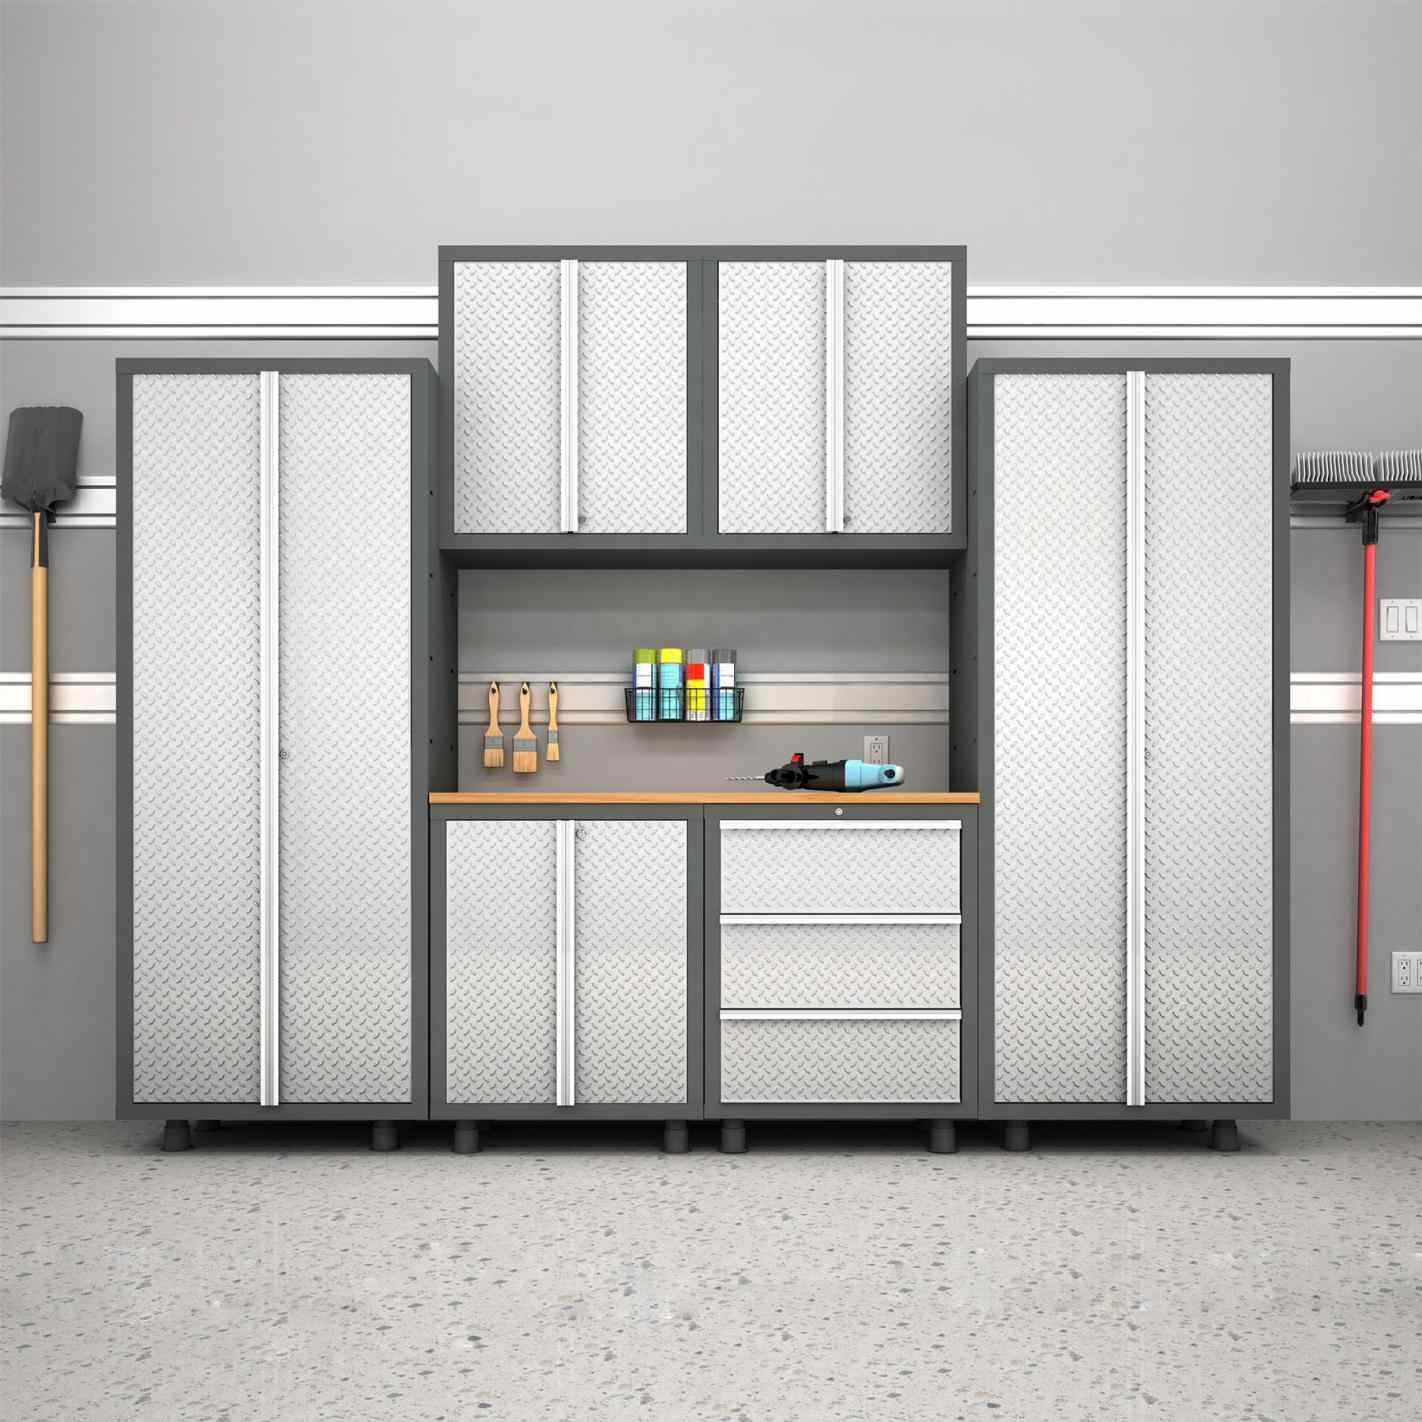 Kobalt Garage Organizer
 Inspirations Husky Garage Cabinets For Inspiring Garage